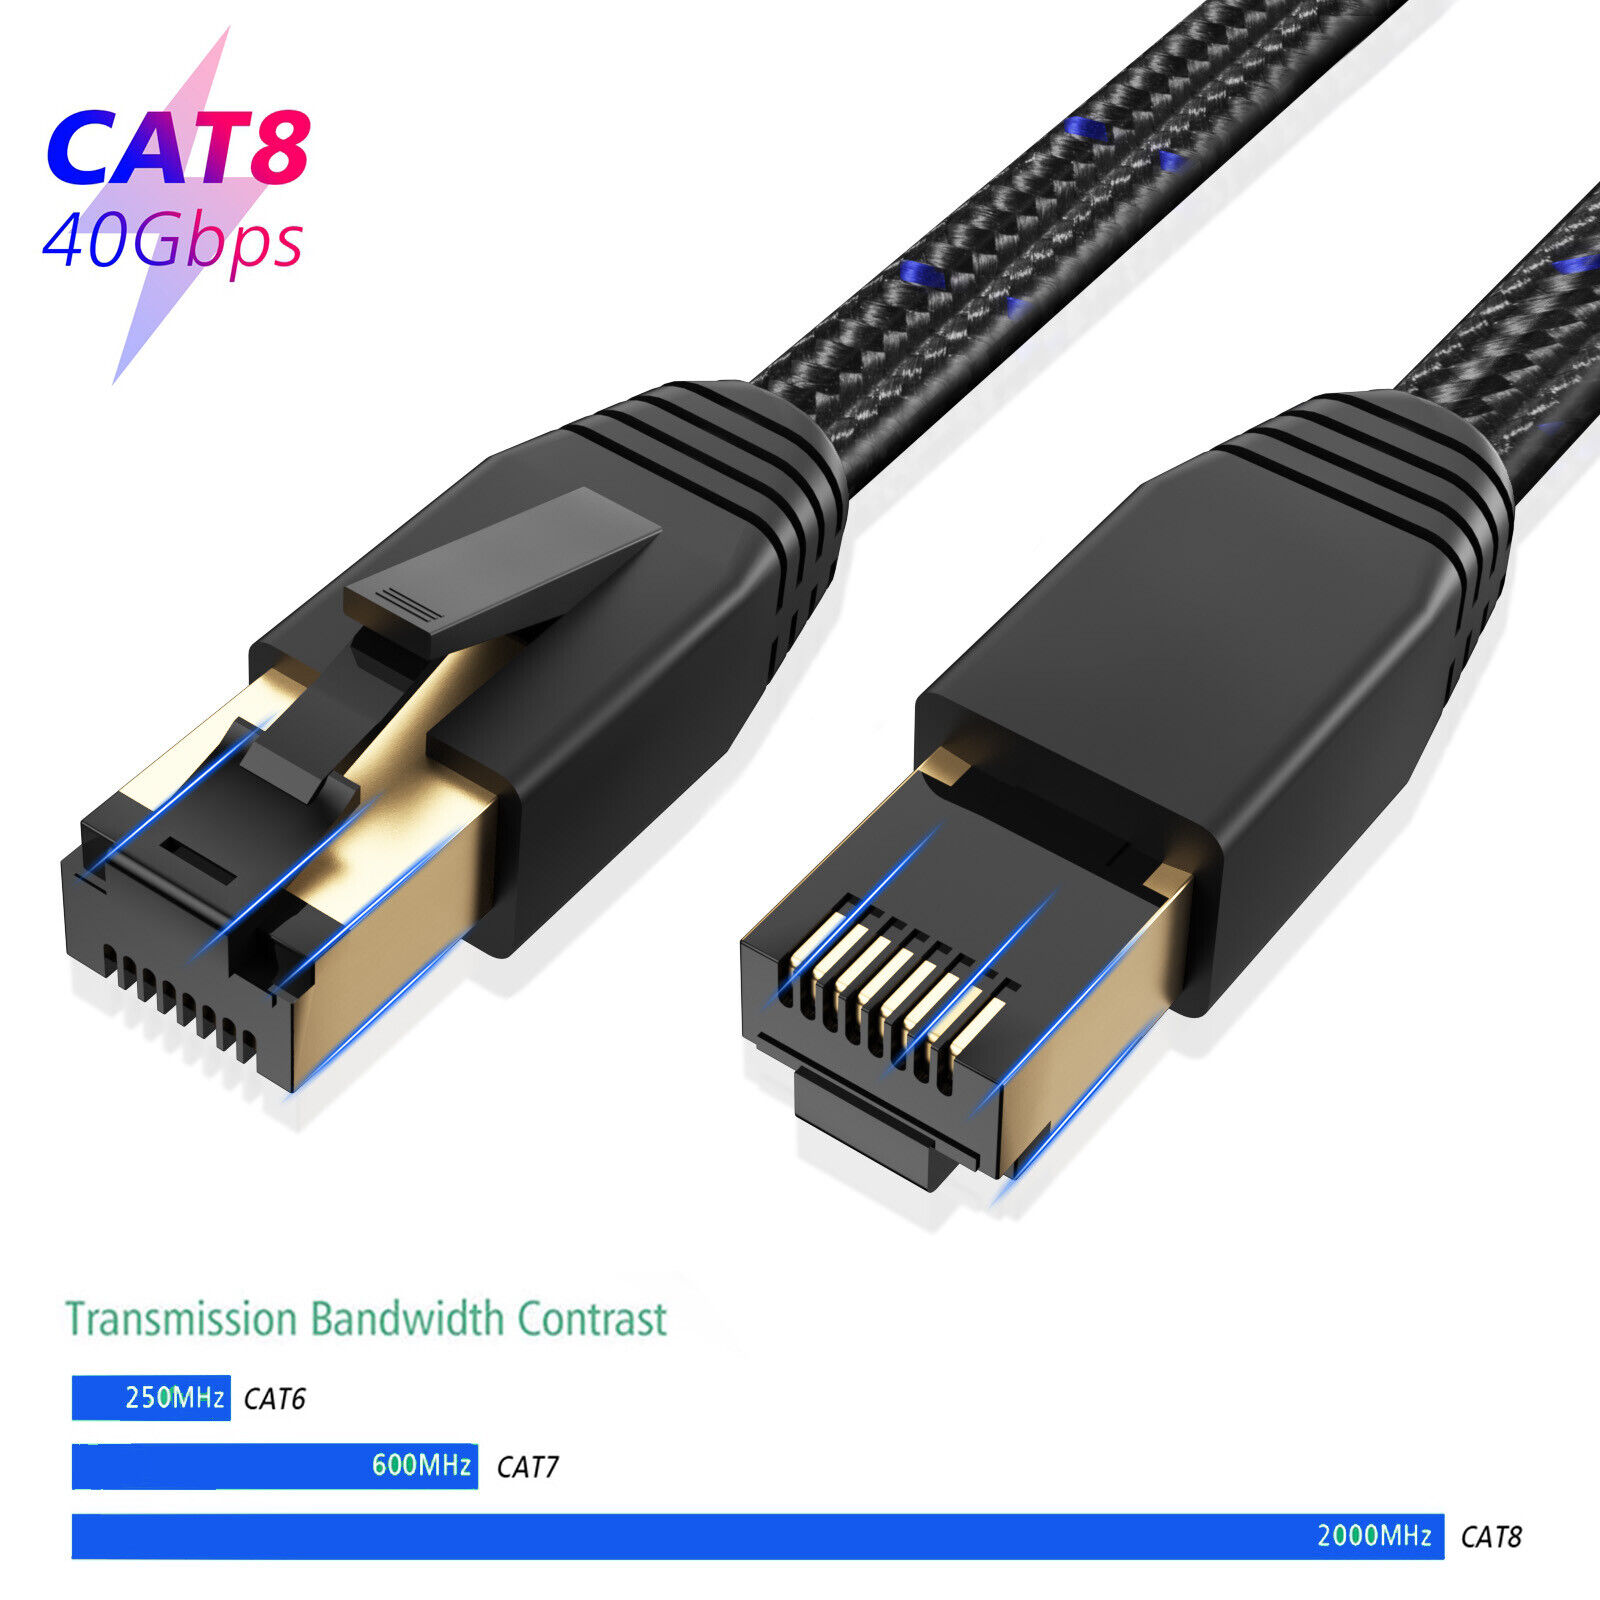 US Premium Cat8 Ethernet Cable Shielded LAN Patch Cord Heavy Duty RJ45 LAN Wire